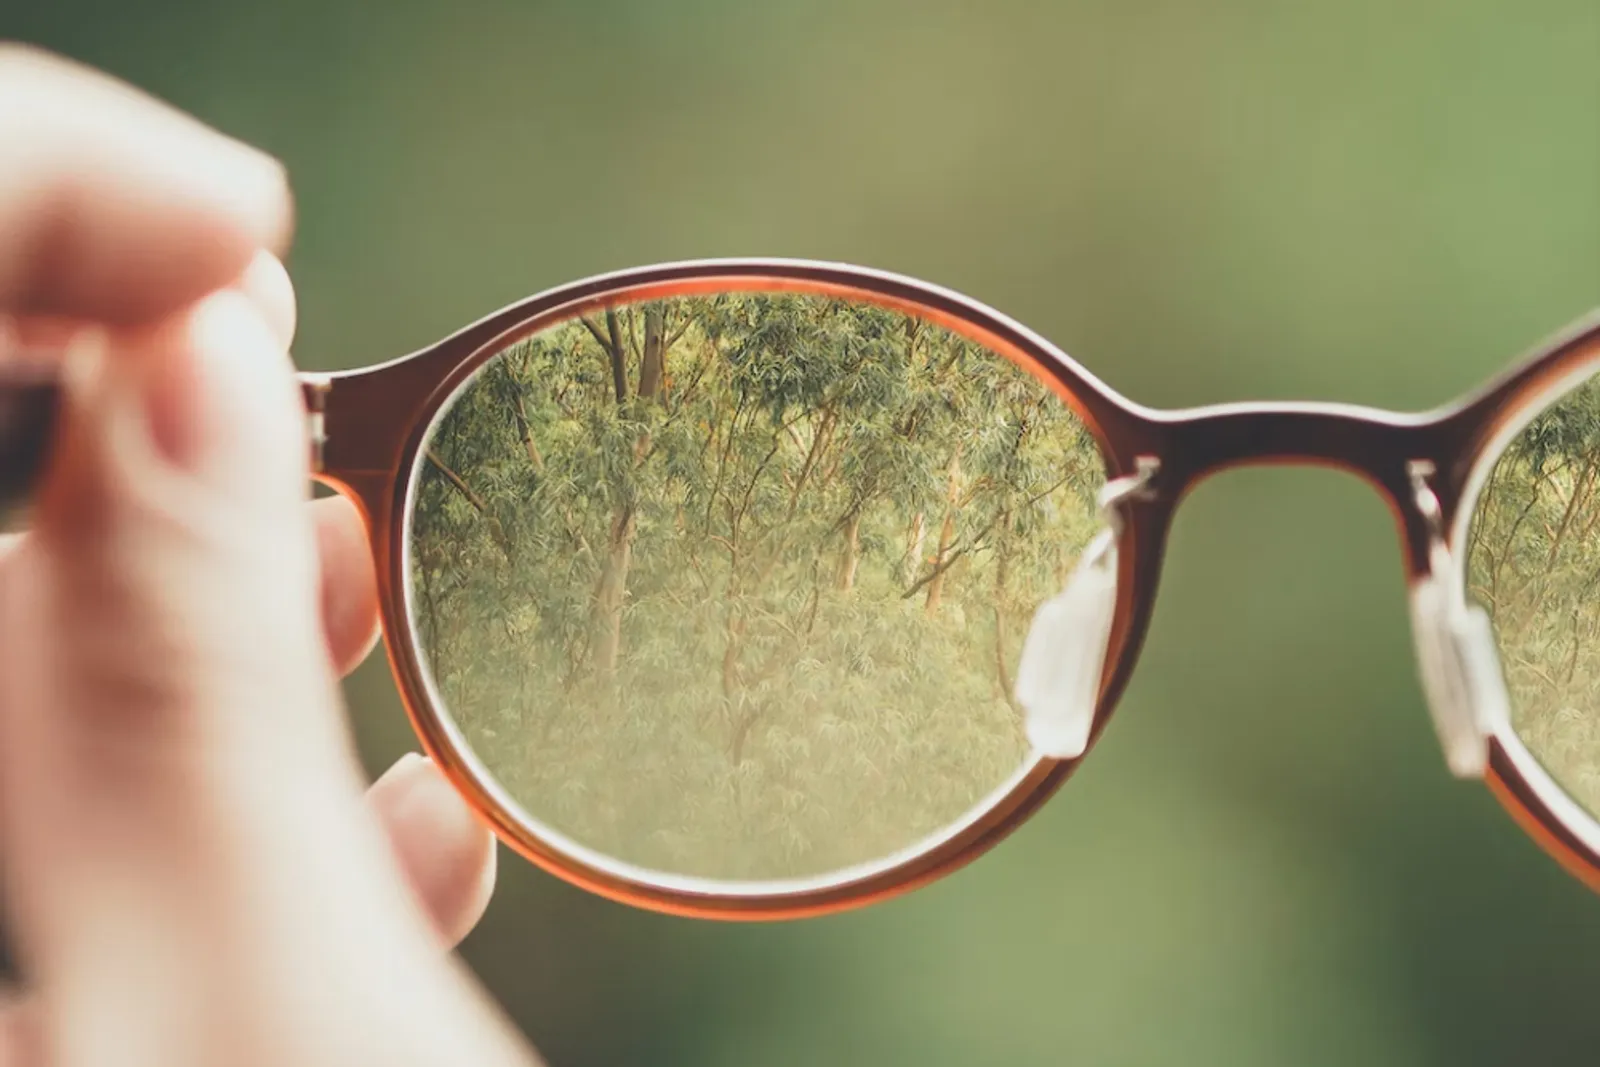 Kacamata Photochromic: Pengertian, Manfaat dan Perawatannya